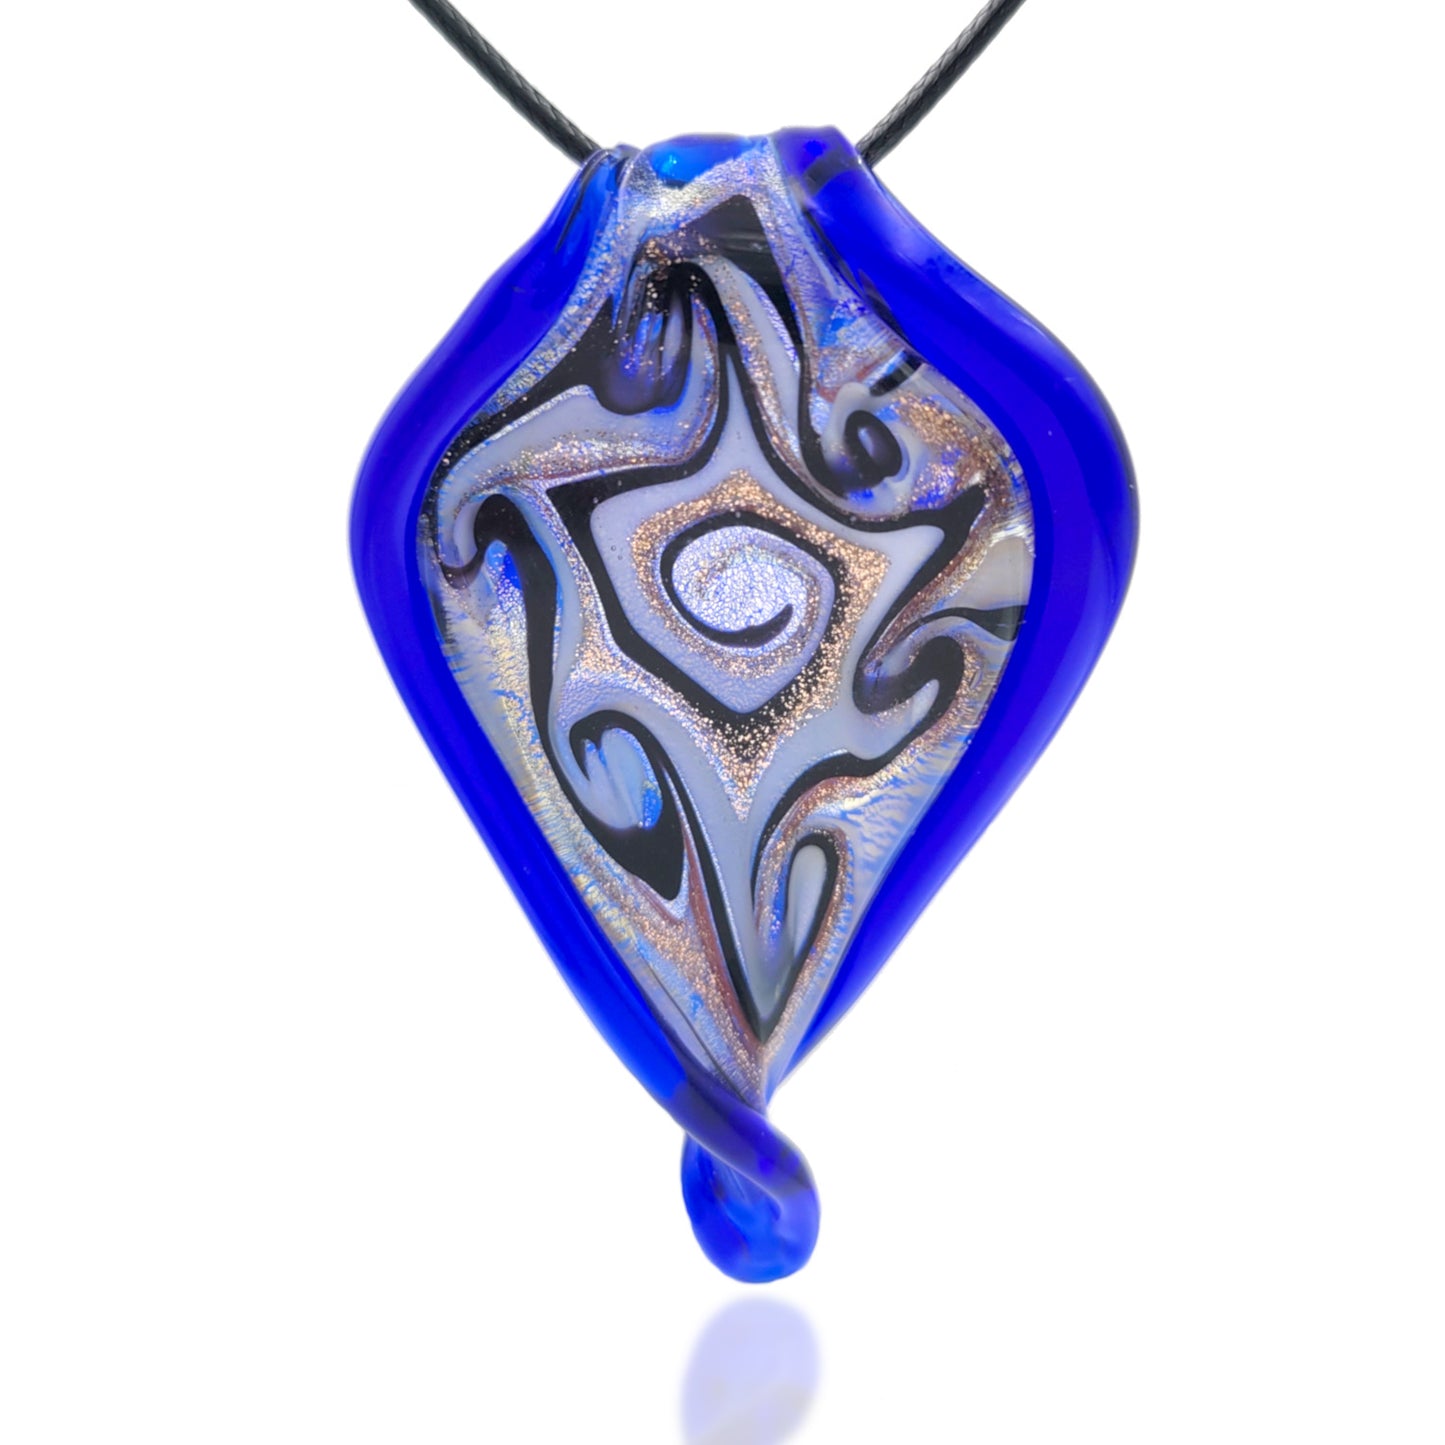 BESHEEK Handmade Murano Inspired Blown Glass Lampwork Art Blue and Silver Twist Leaf Necklace Pendant ? Handcrafted Artisan Hypoallergenic Italian Style Jewelry